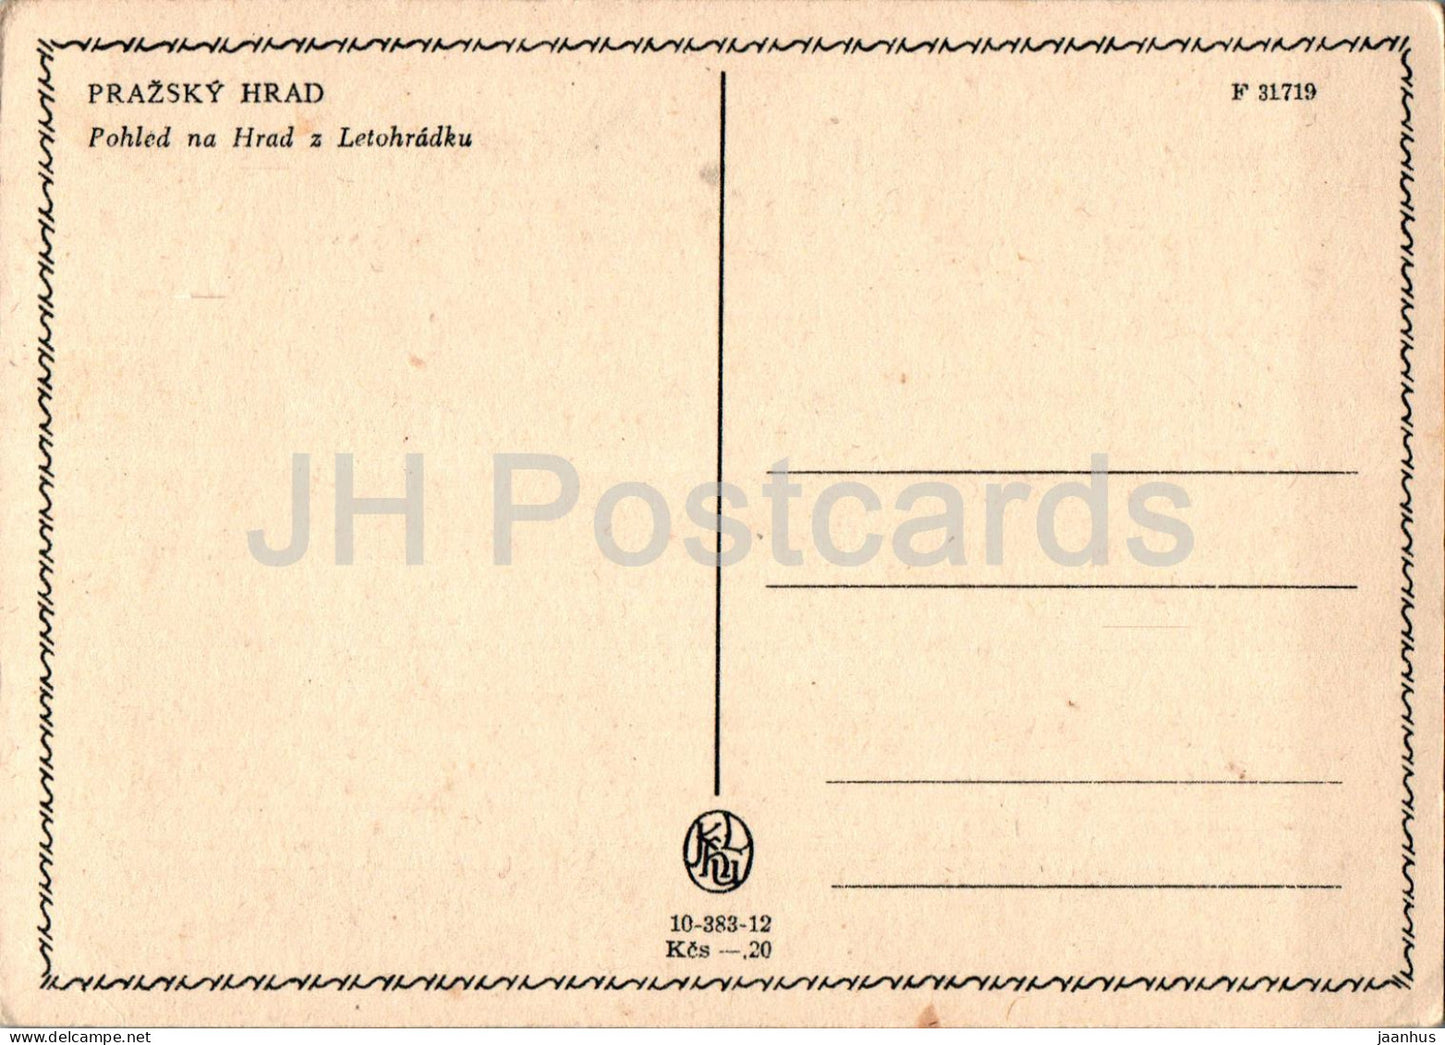 Praha - Prague - Pohled na Hrad z Letohradku - Letohradek - old postcard - Czech Republic - Czechoslovakia - unused